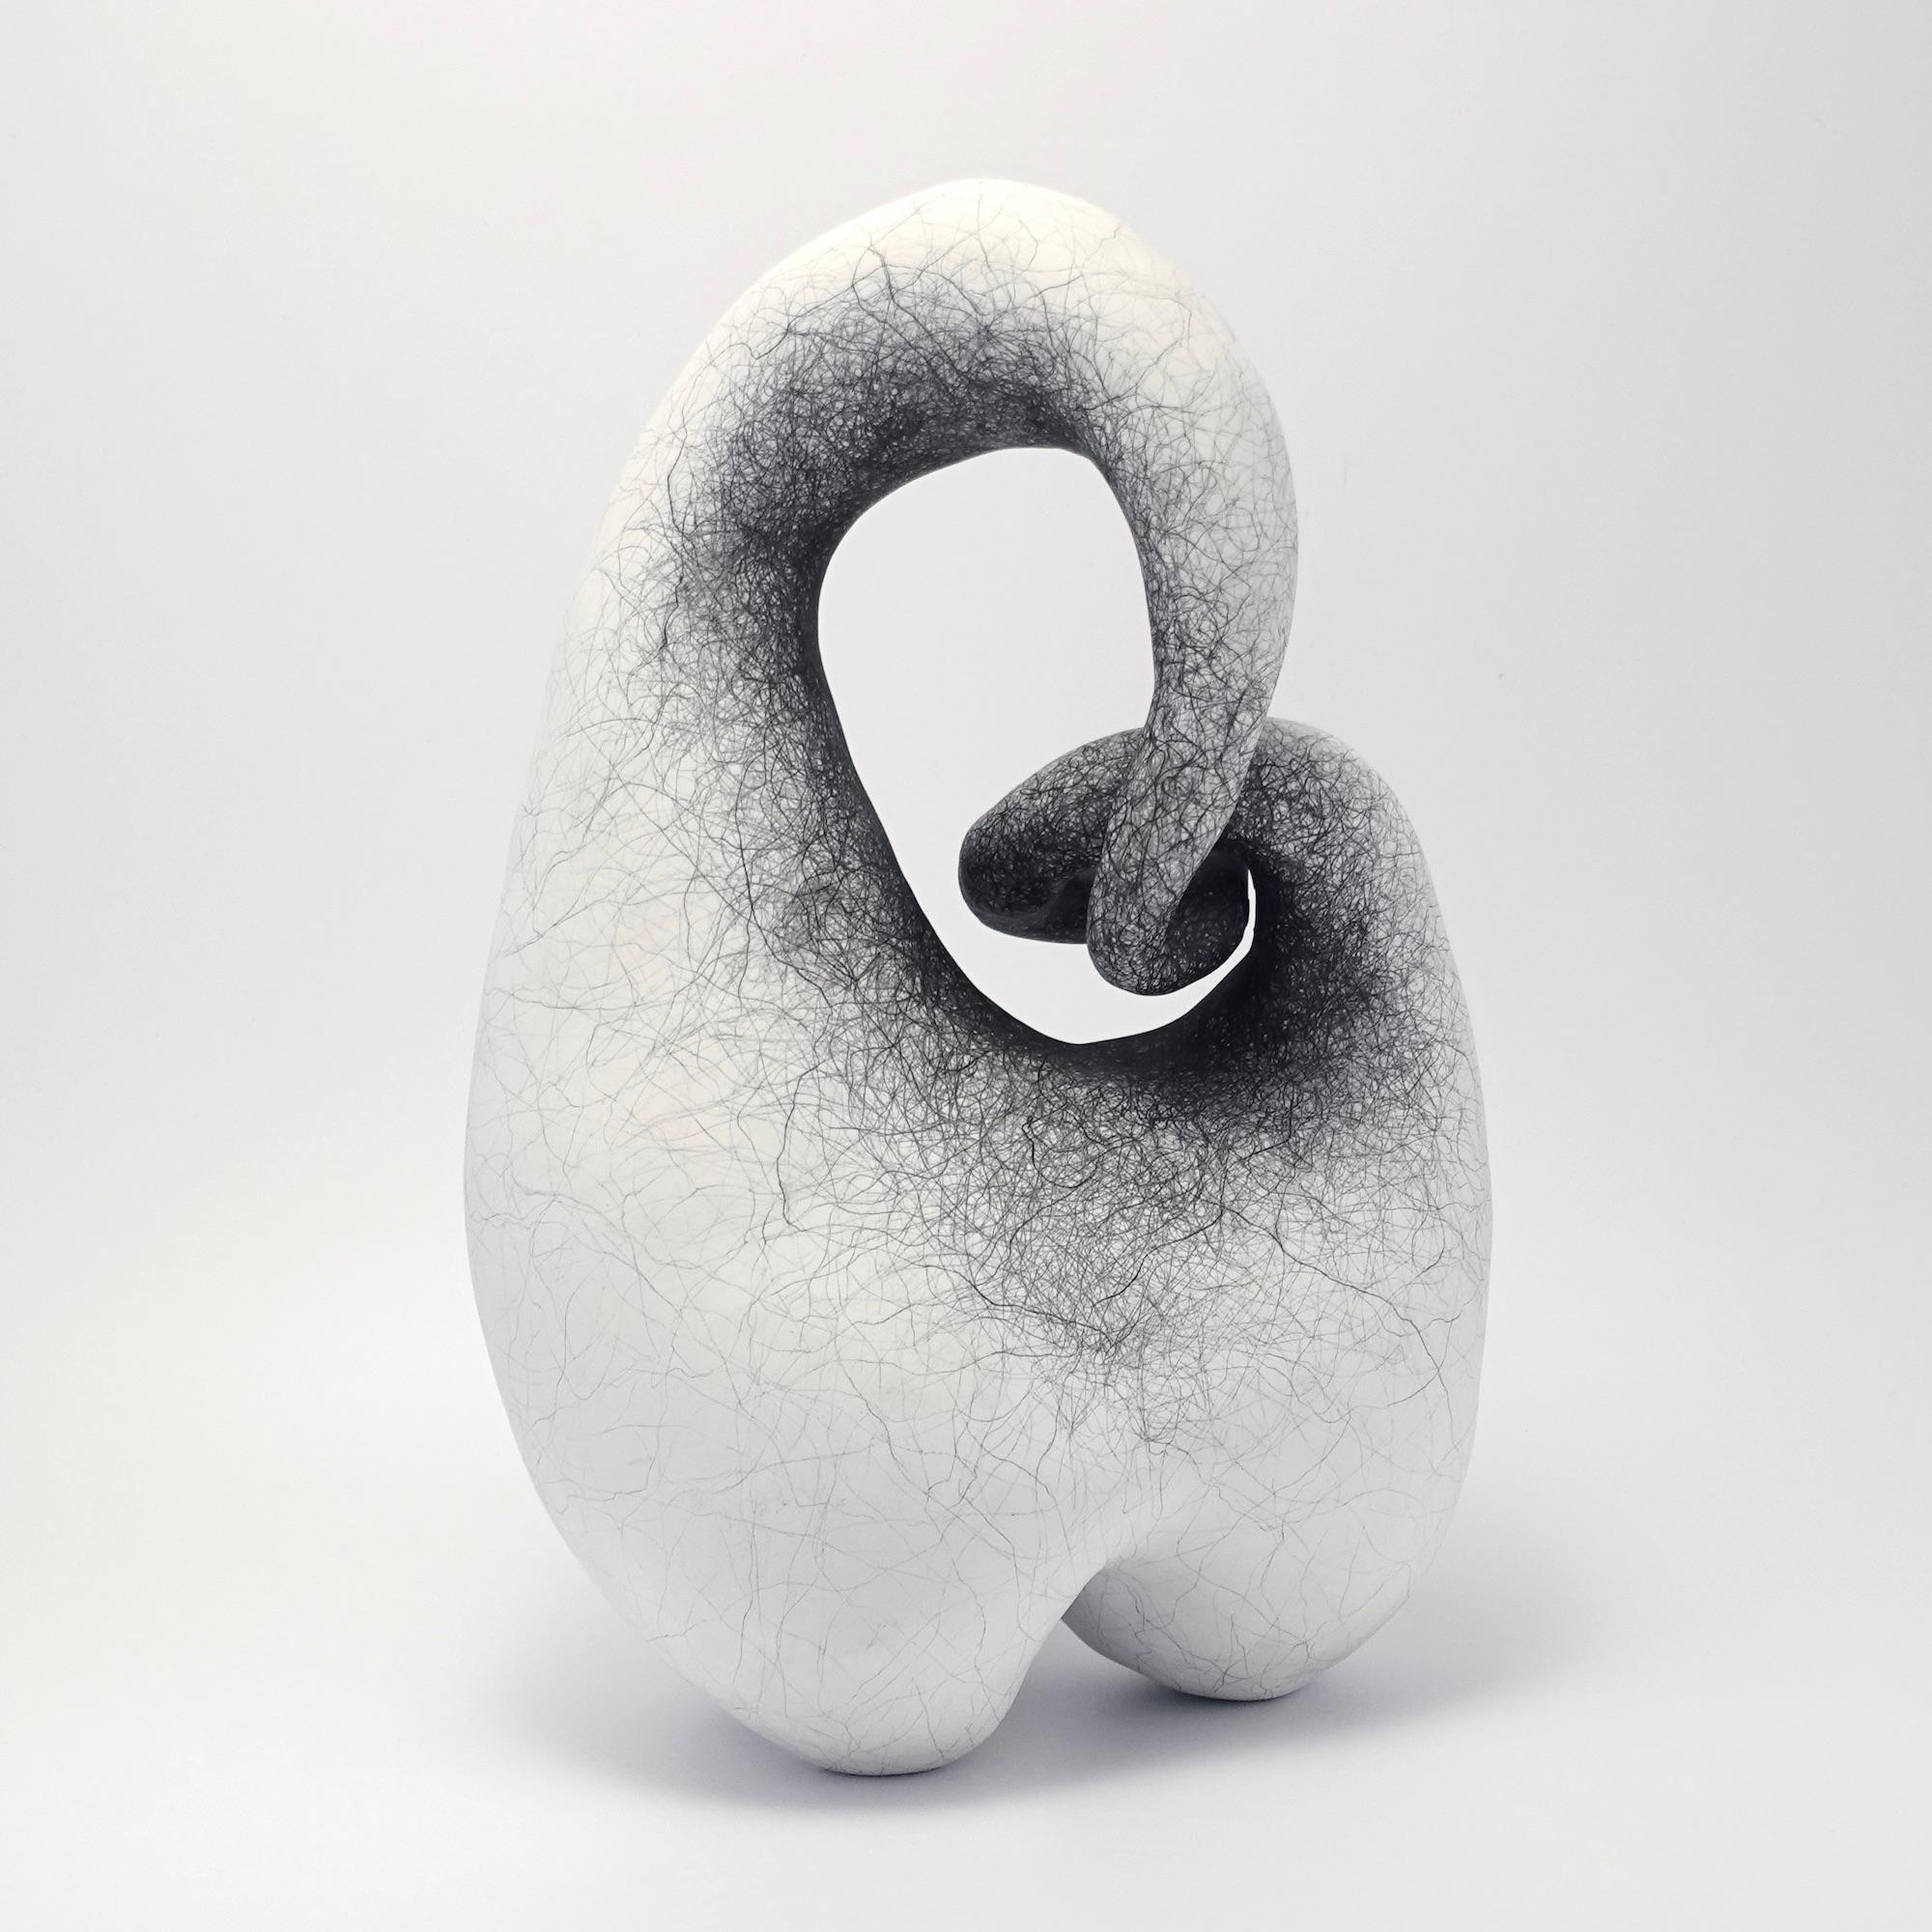 Sculpture abstraite minimaliste en argile : 'Turn' ( tourner) - Gris Abstract Sculpture par Judi Tavill